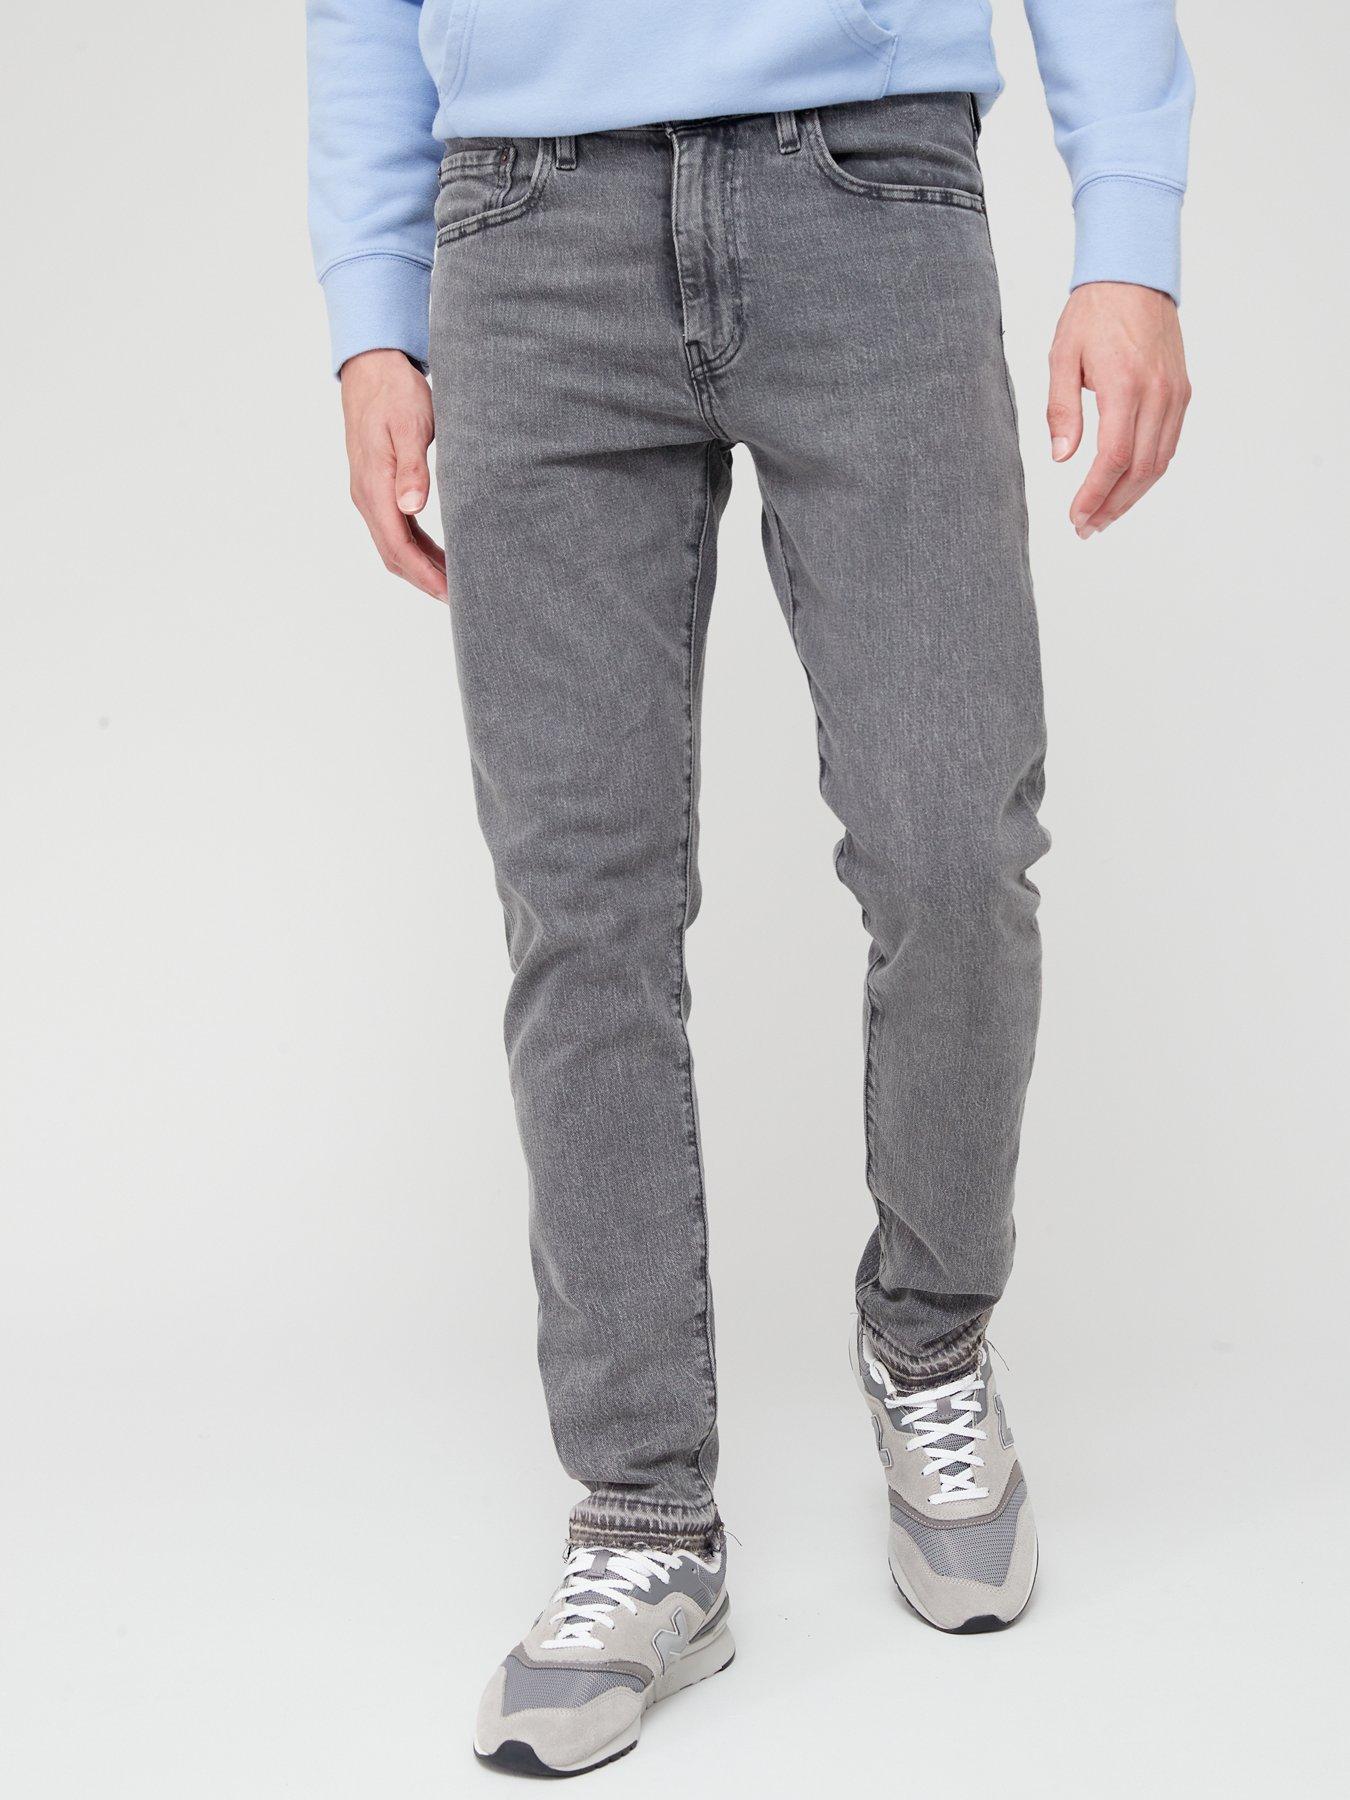 Levi's 512 Slim Taper Fit Jeans - Grey Wash 